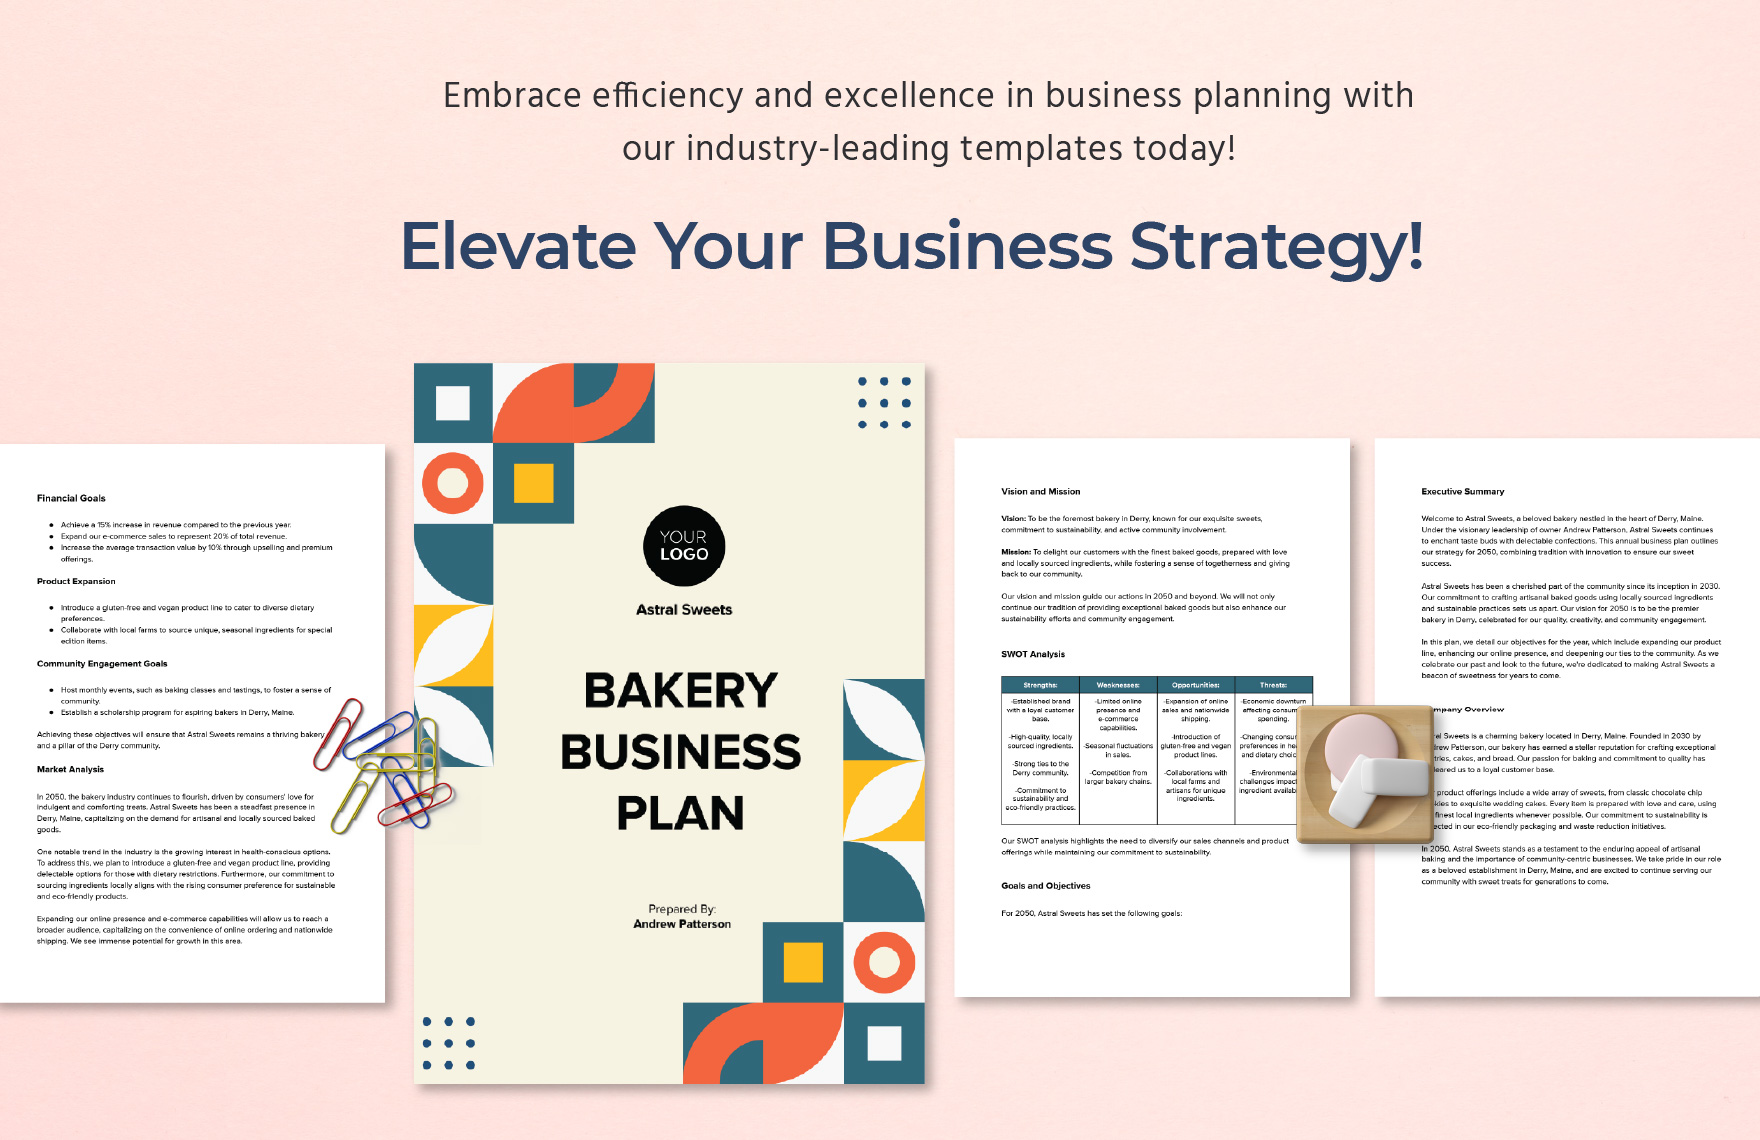 Bakery Business Plan Template